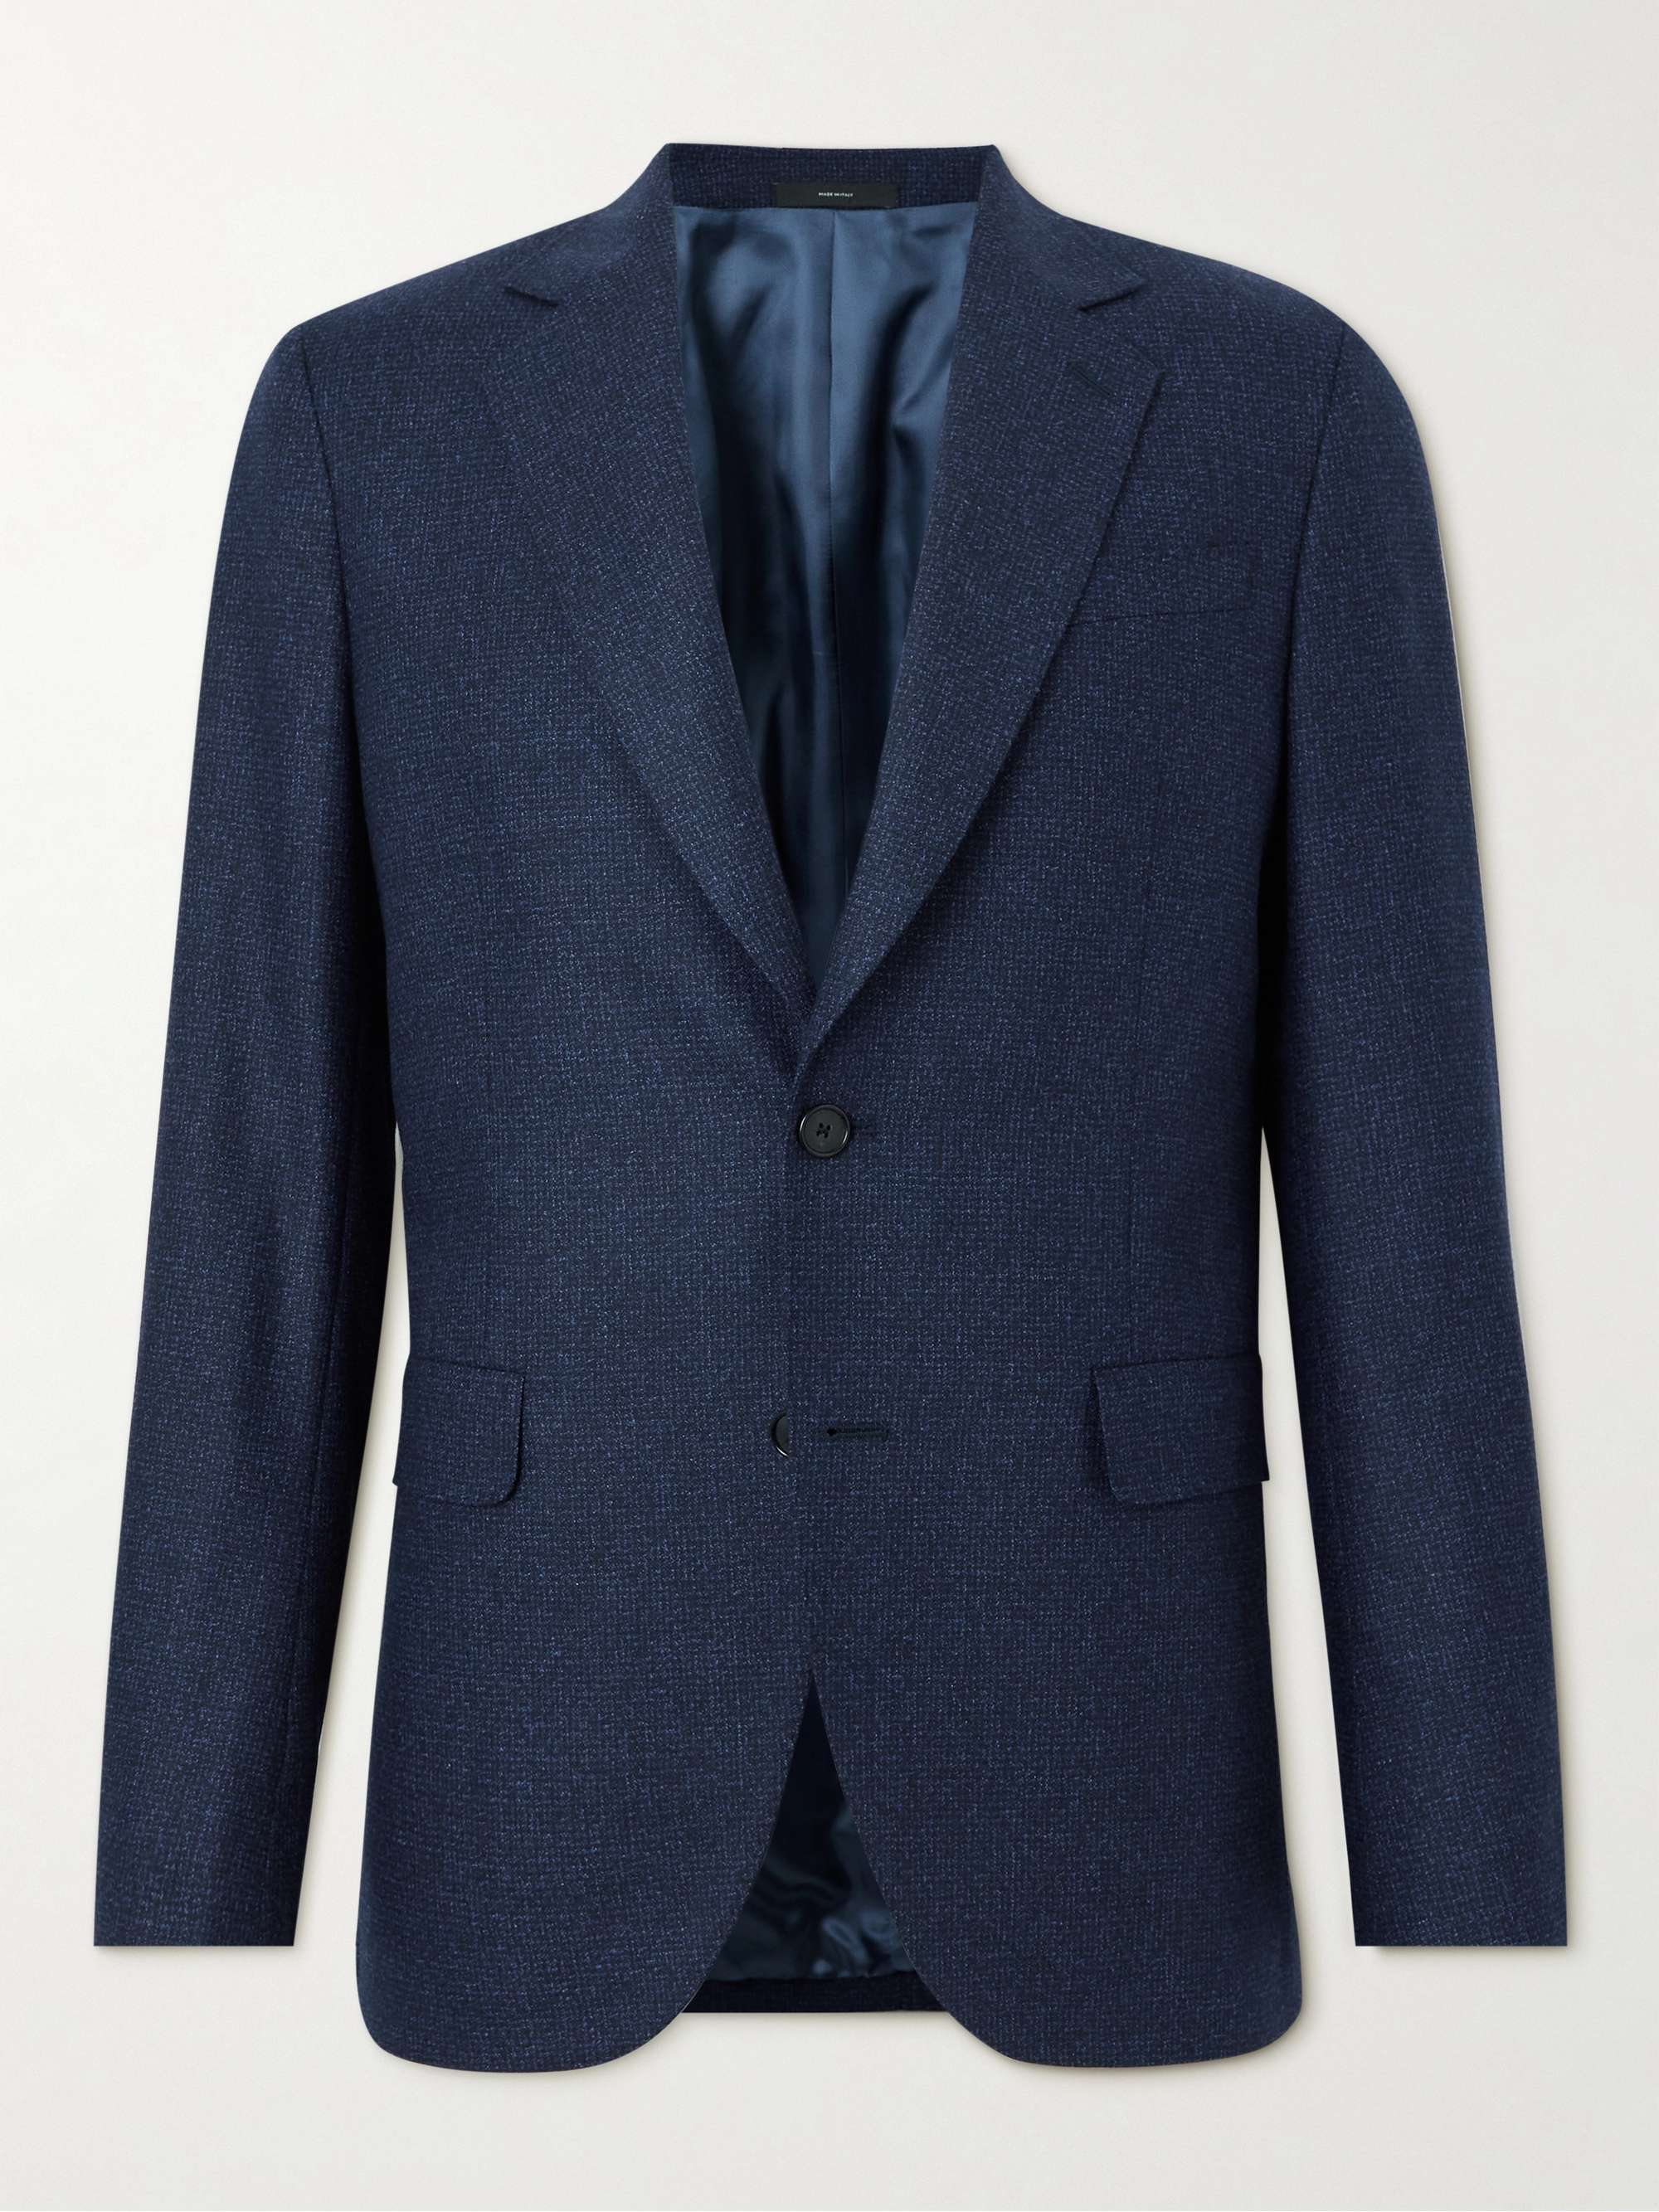 PAUL SMITH Wool-Tweed Suit Jacket | MR PORTER